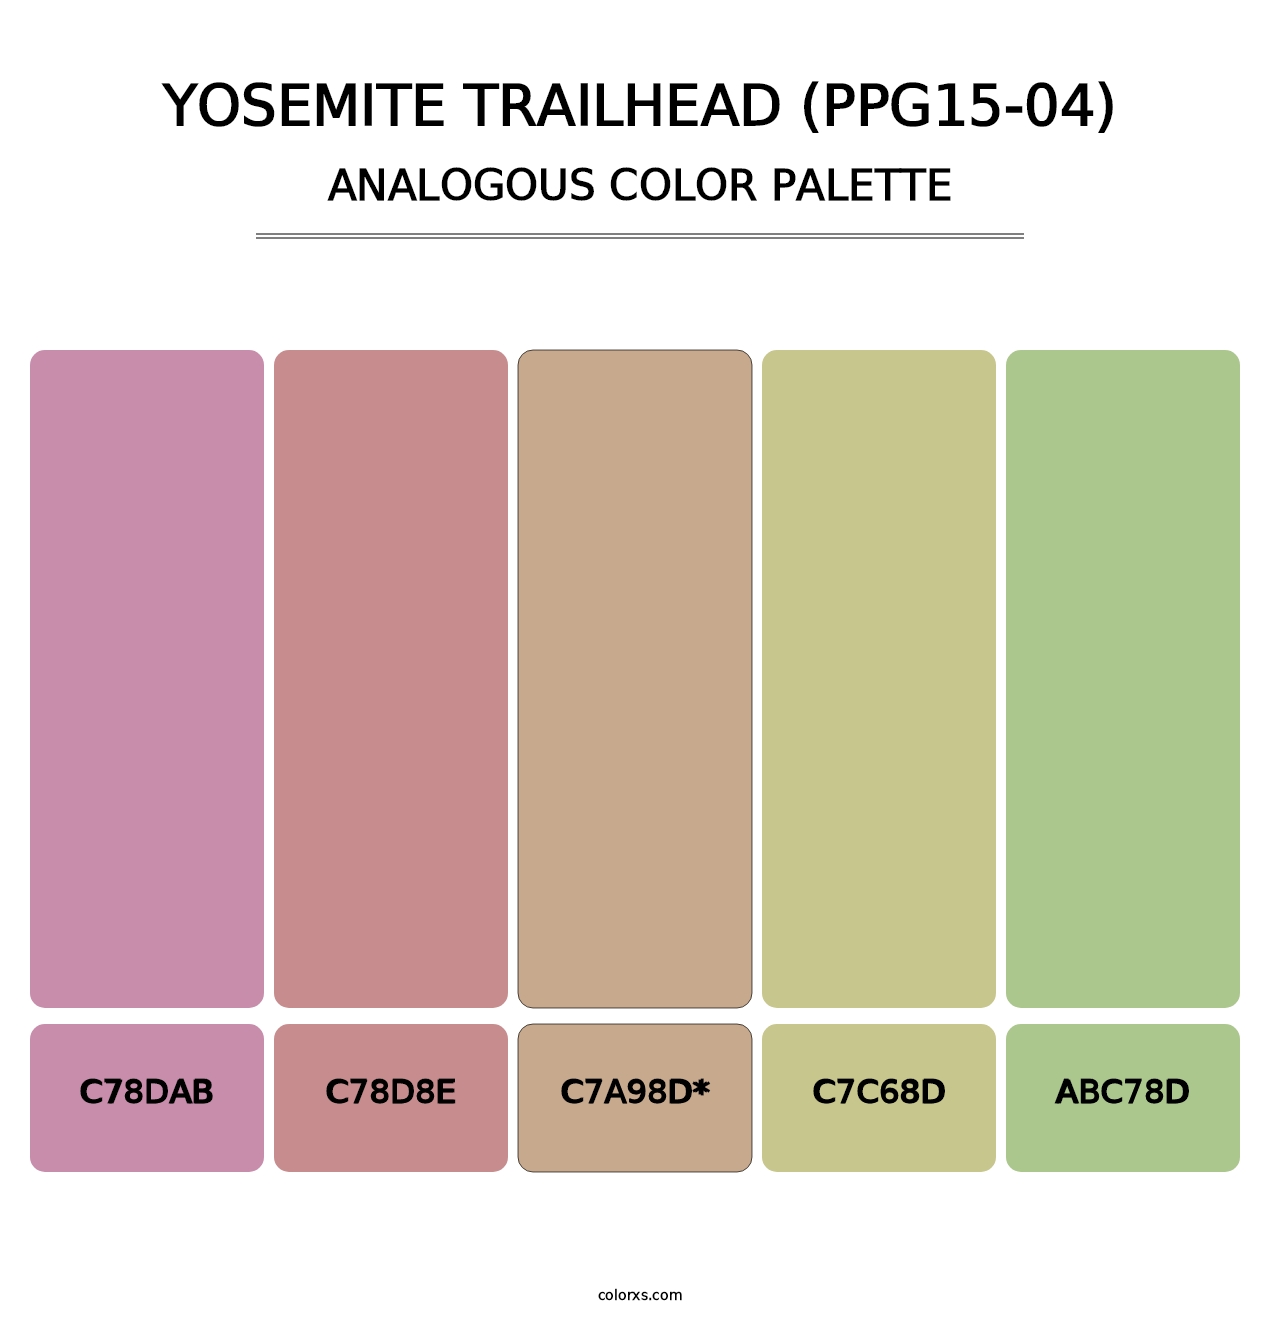 Yosemite Trailhead (PPG15-04) - Analogous Color Palette